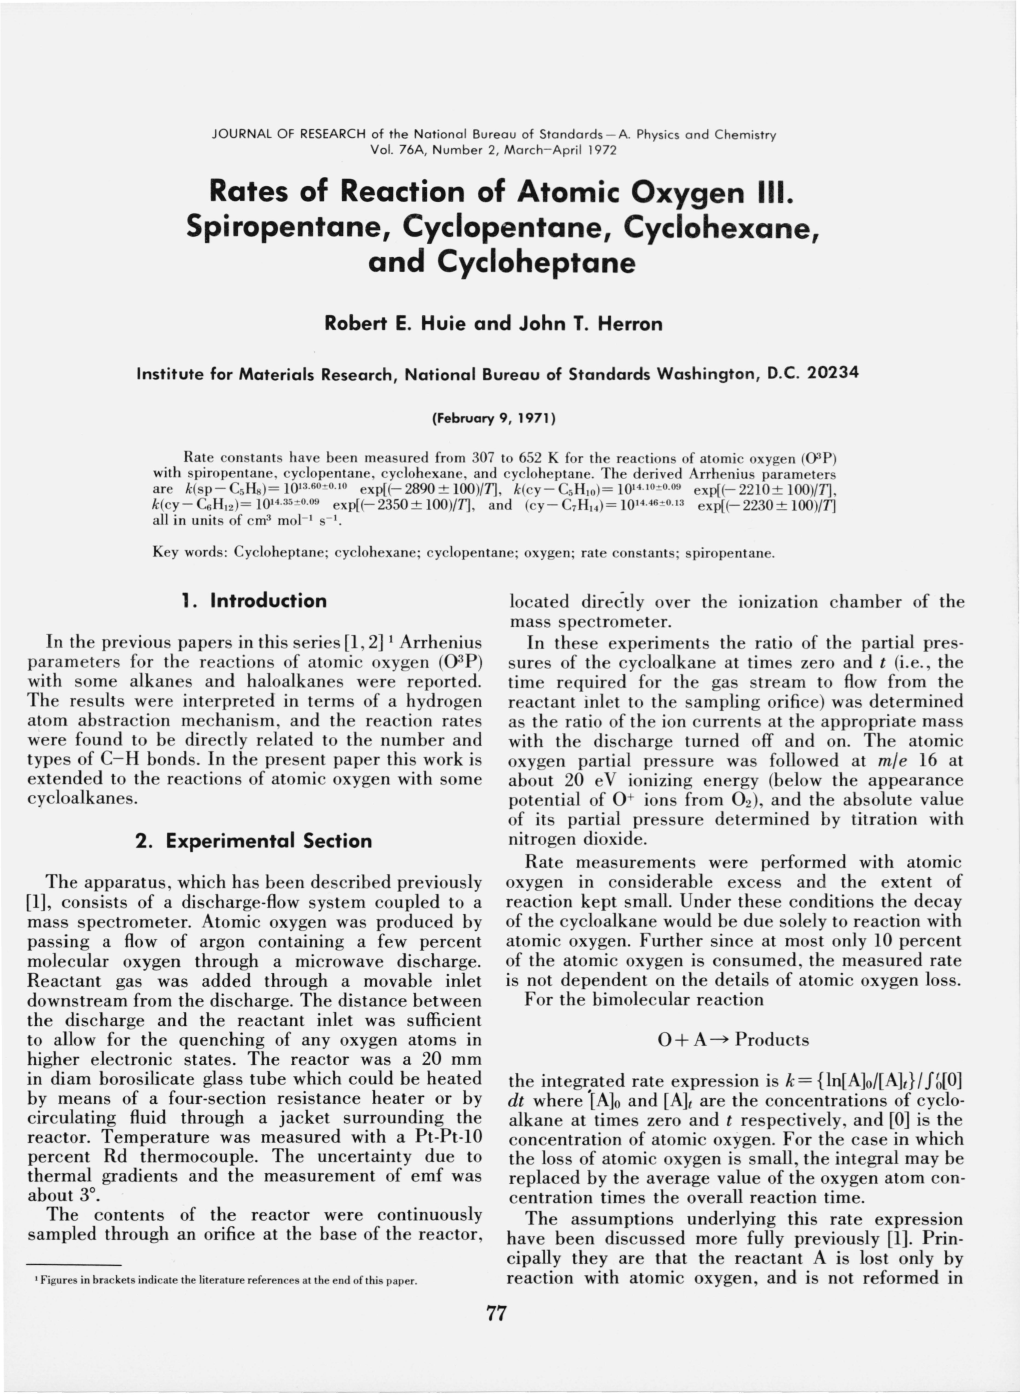 Rates of Reaction of Atomic Oxygen. III. Spiropentane, Cyclopentane